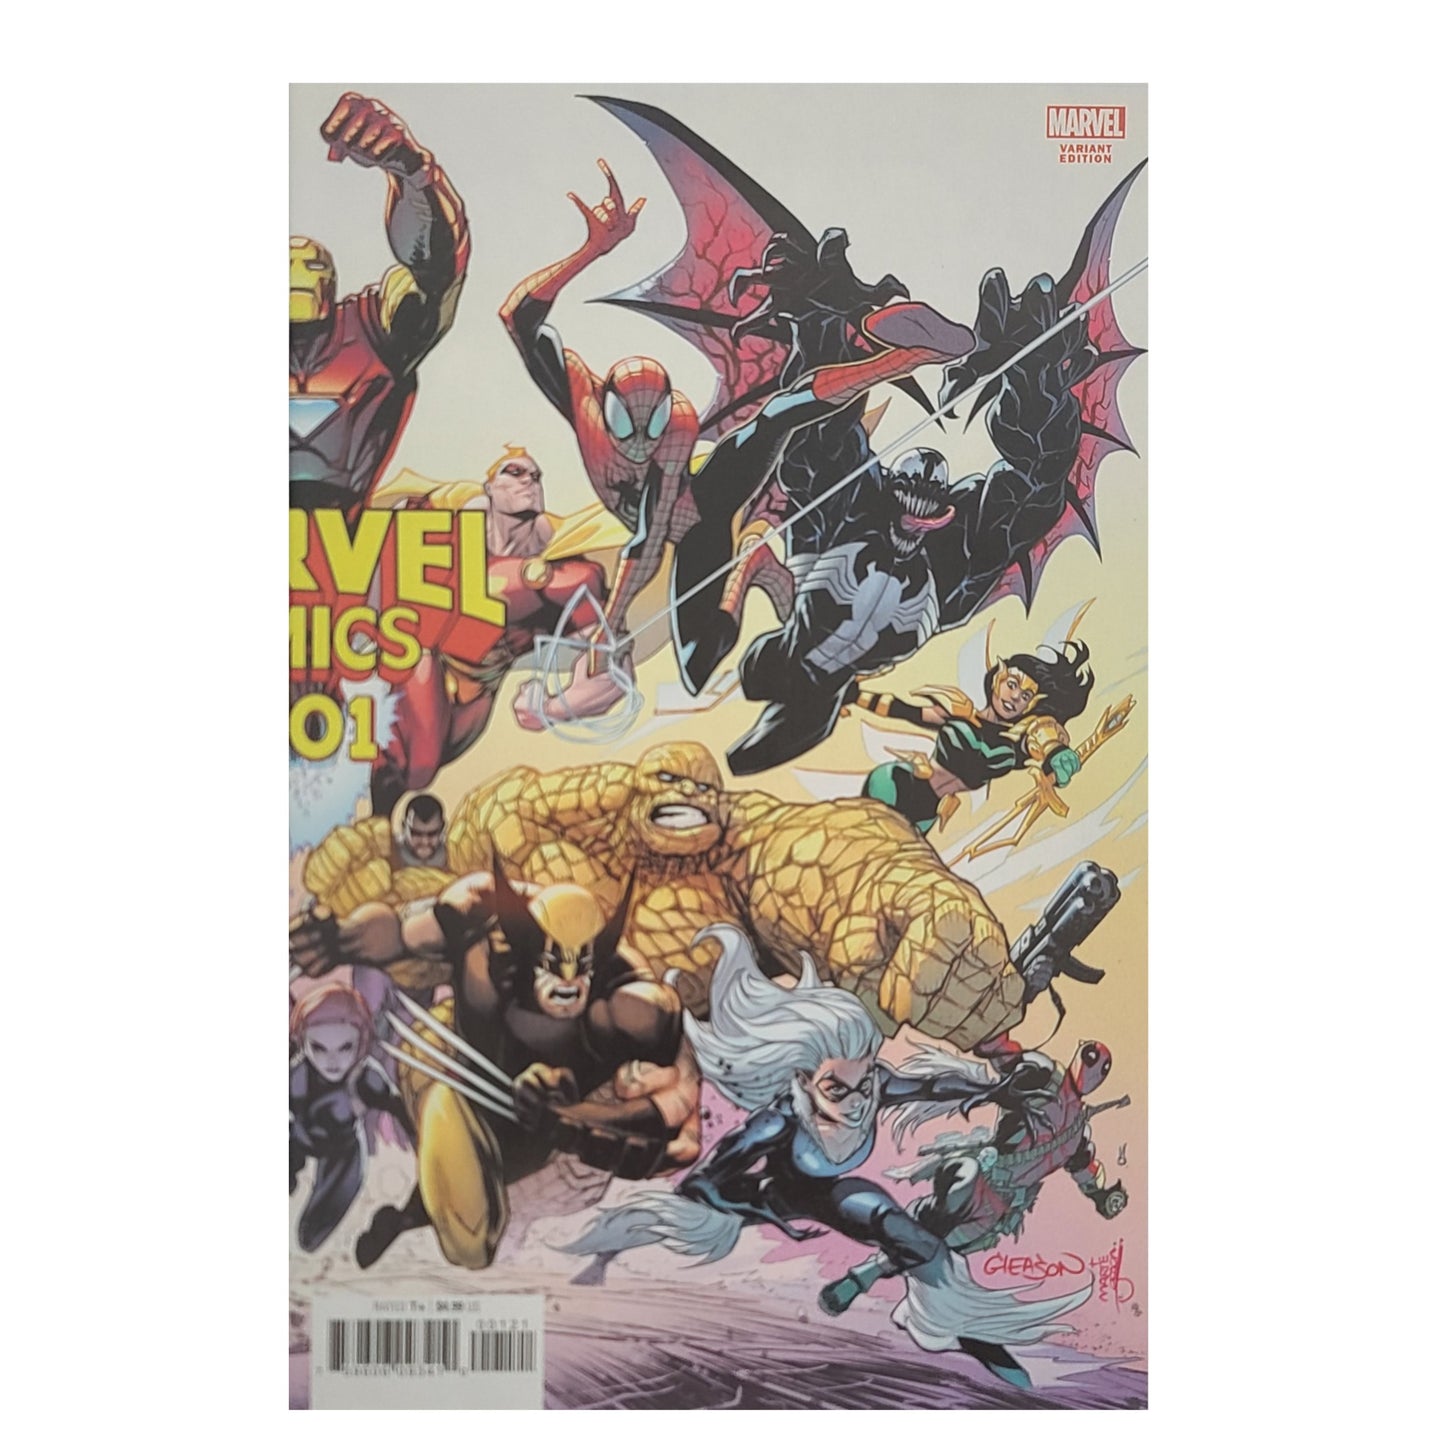 Marvel Comics #1001 - Variant Cover (2019)